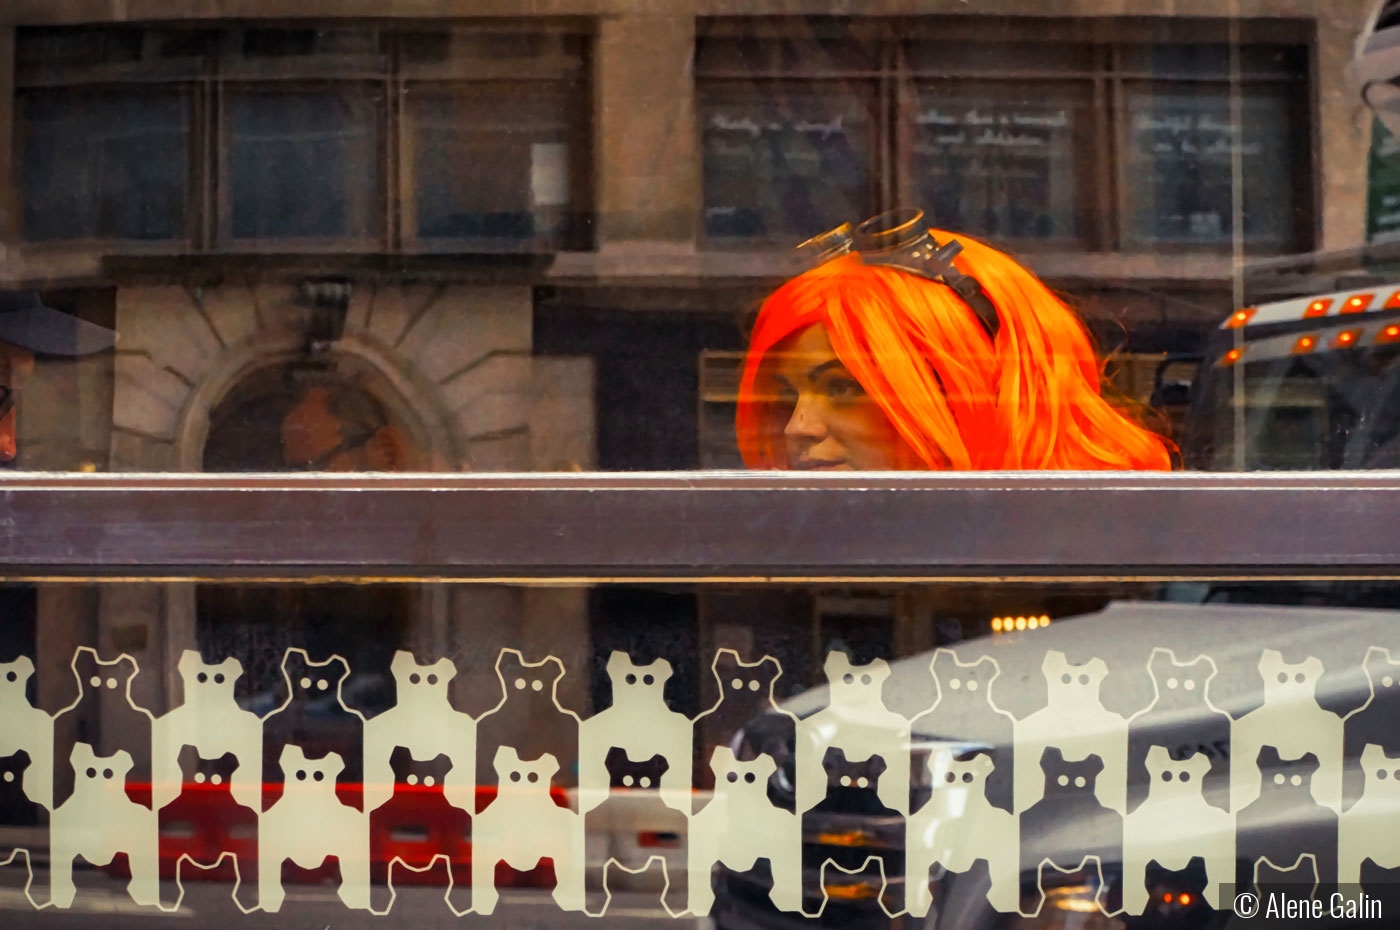 Reflections on NYC Window by Alene Galin